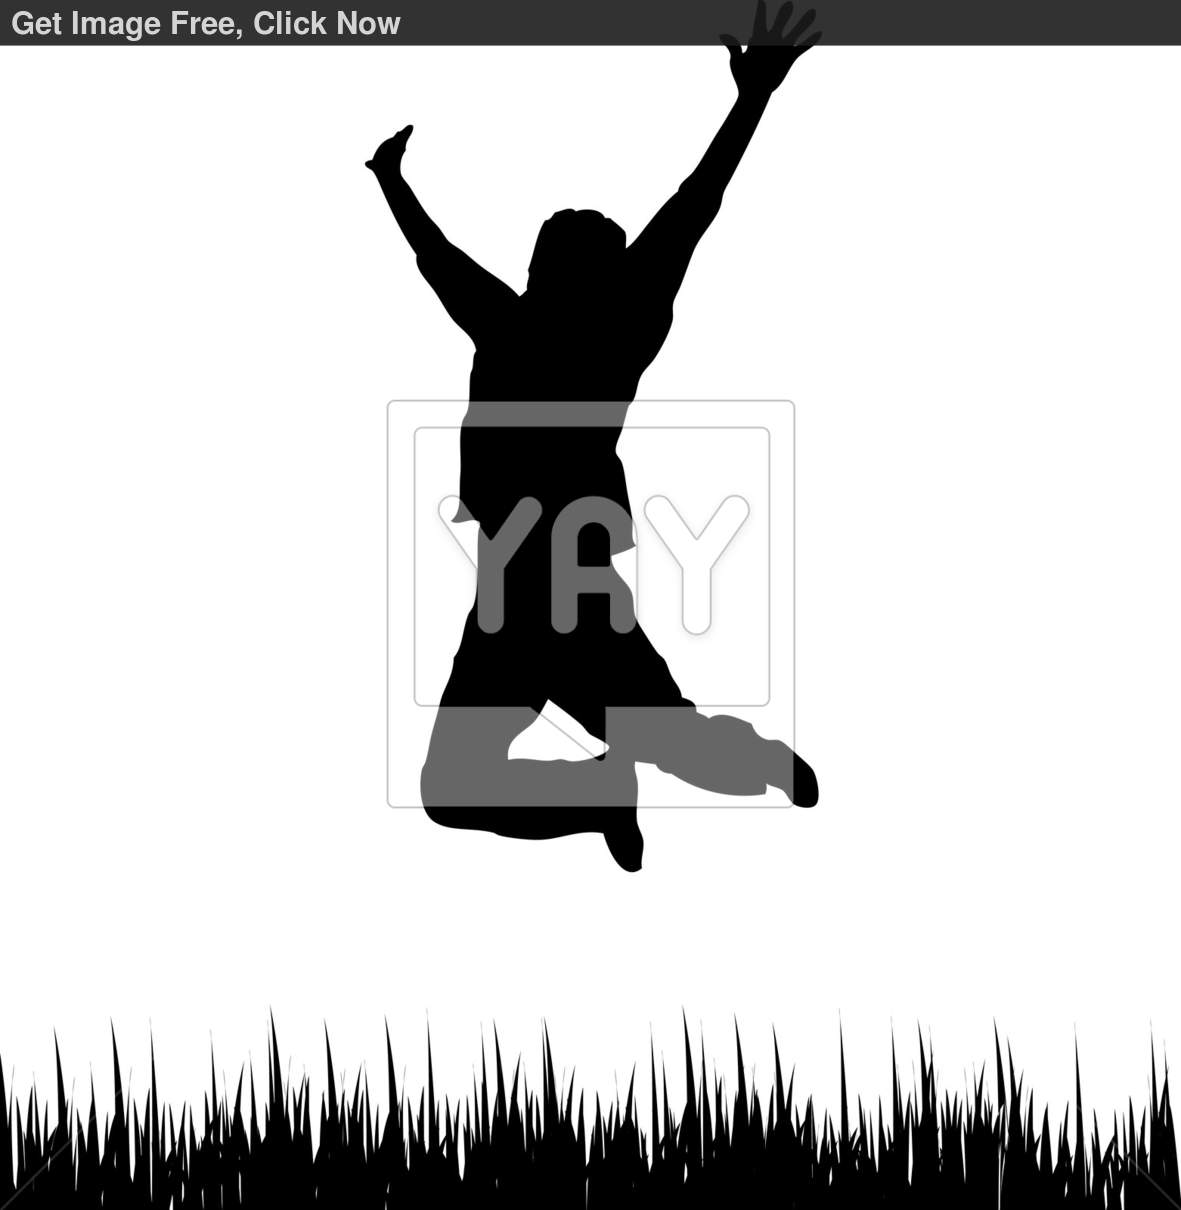 Happy Jumping Man Silhouette Clip Art At Clker Com Vector Clip Art